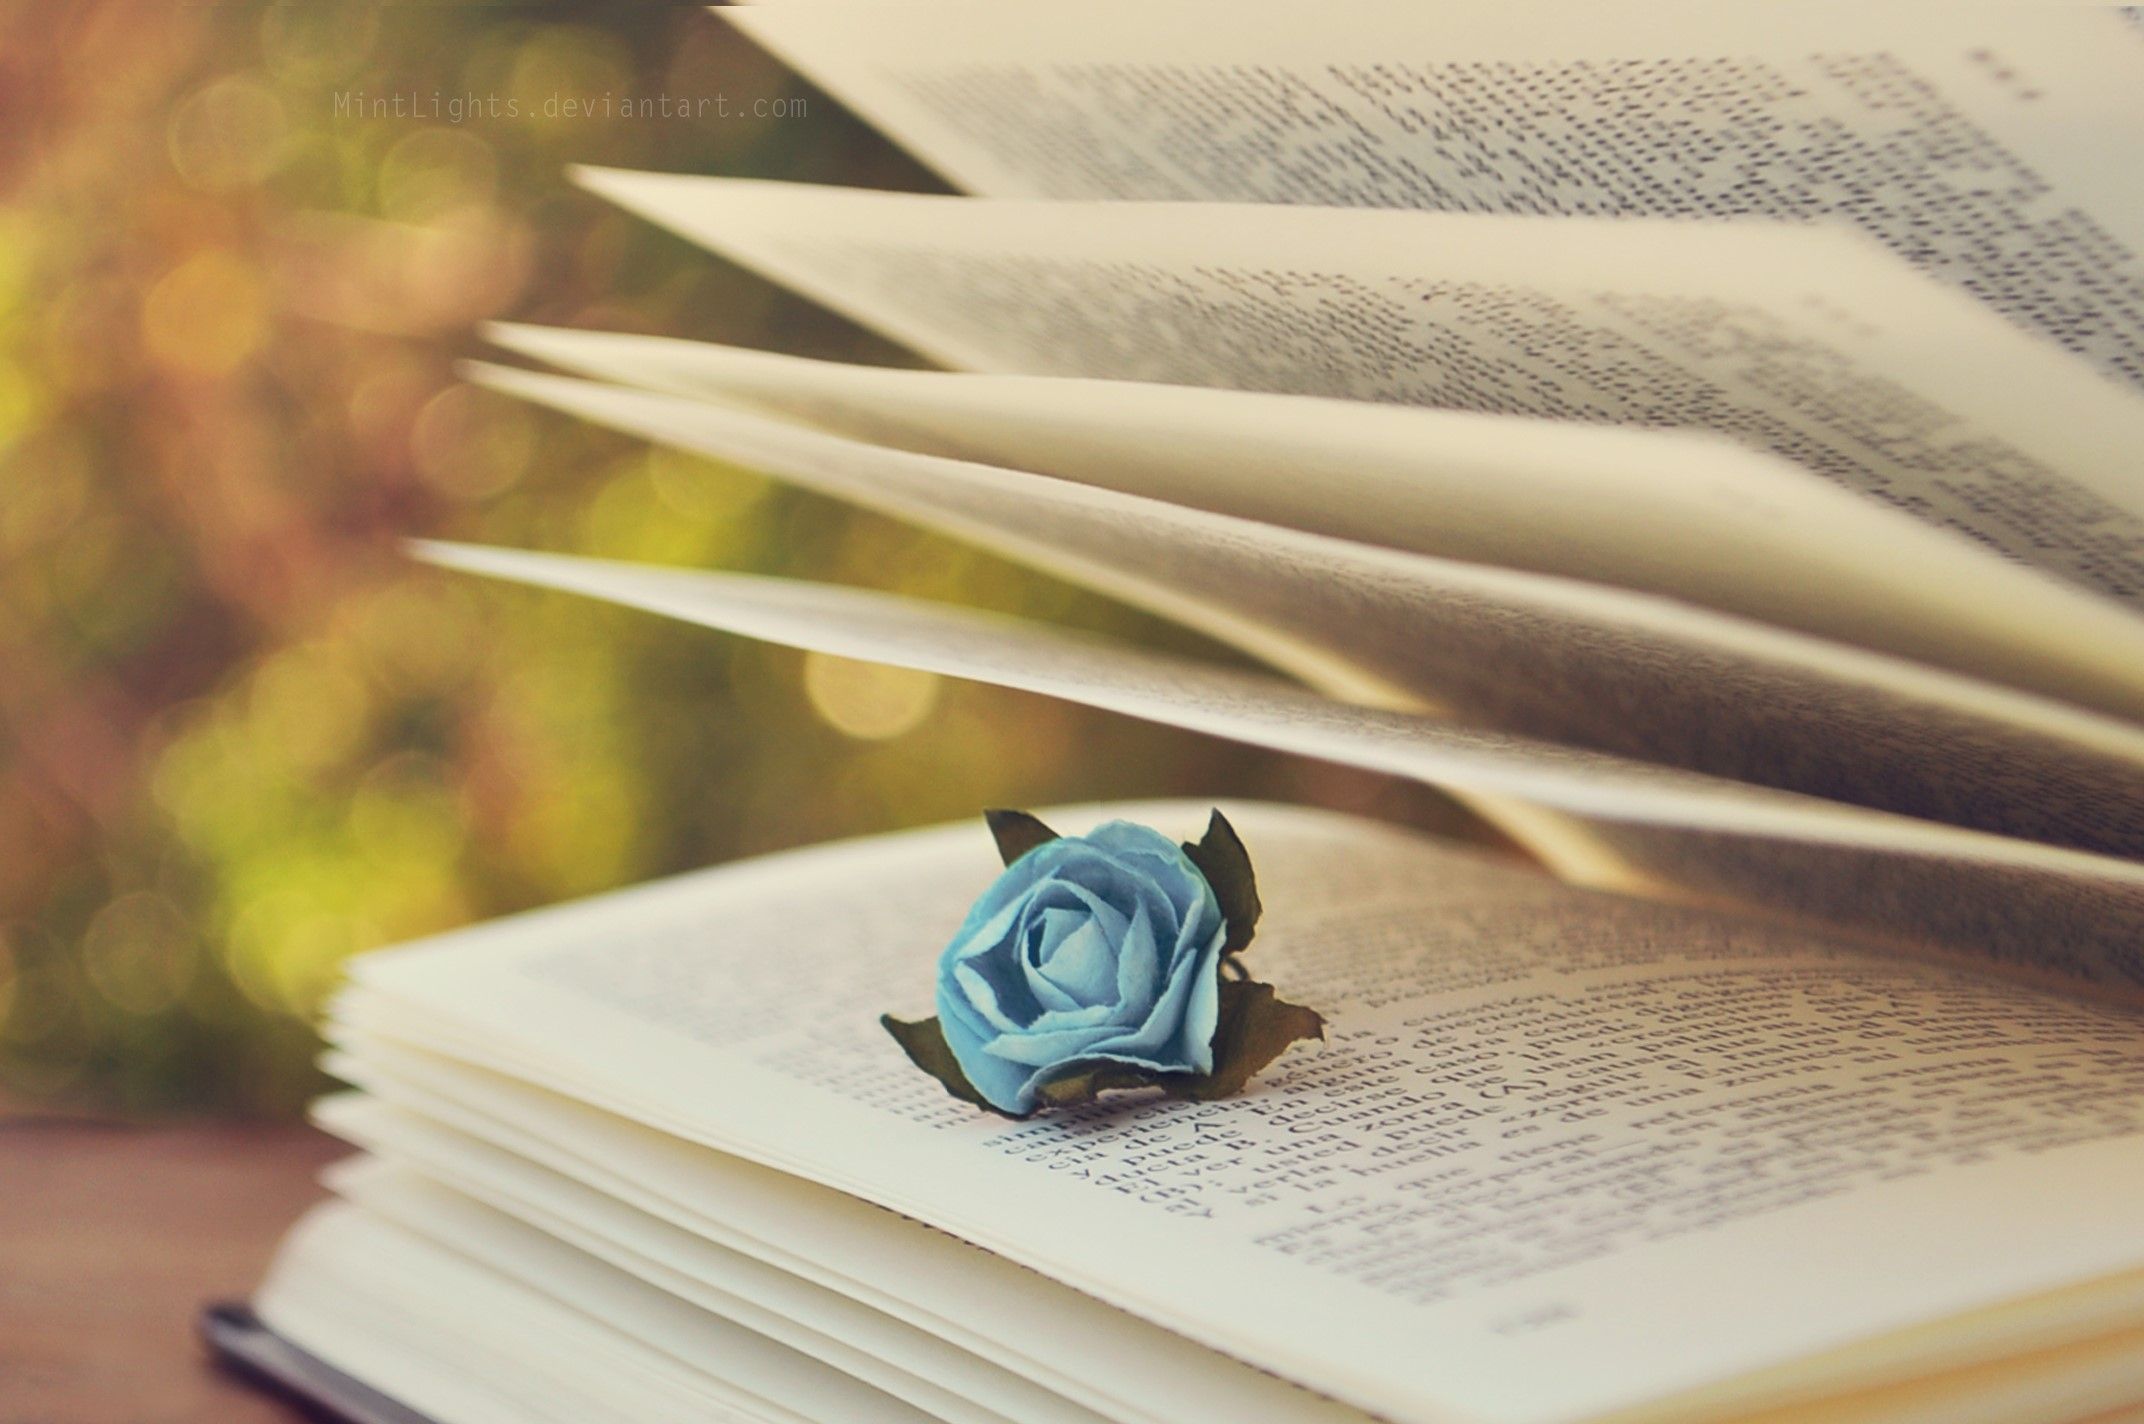 A blue rose on an open book - Books